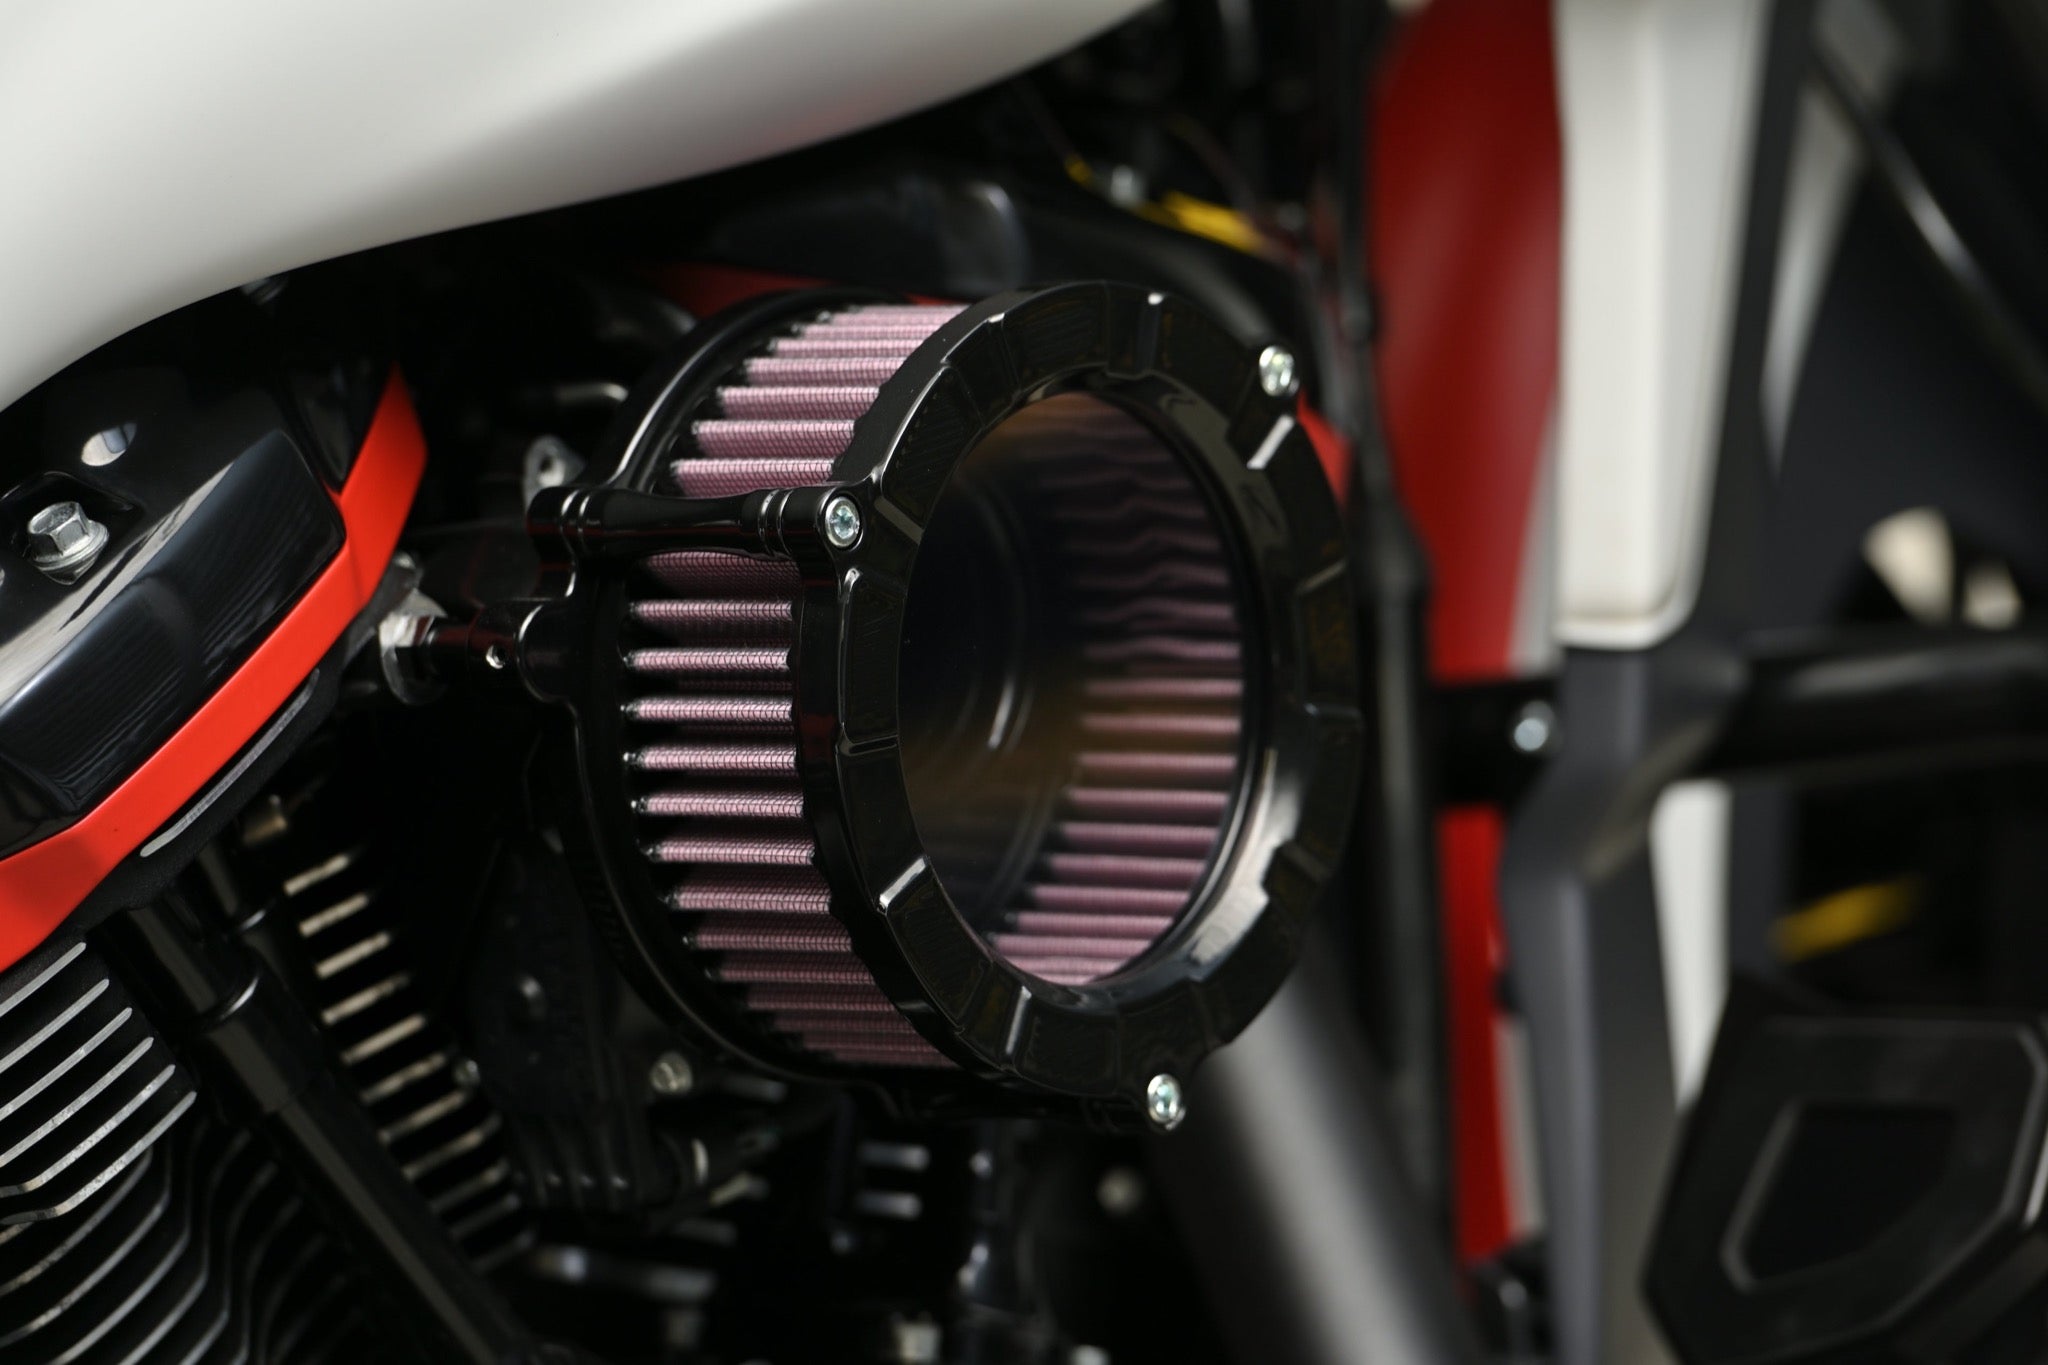 Harley Davidson Milwaukee-8 Touring, Softail Transparent air filter black